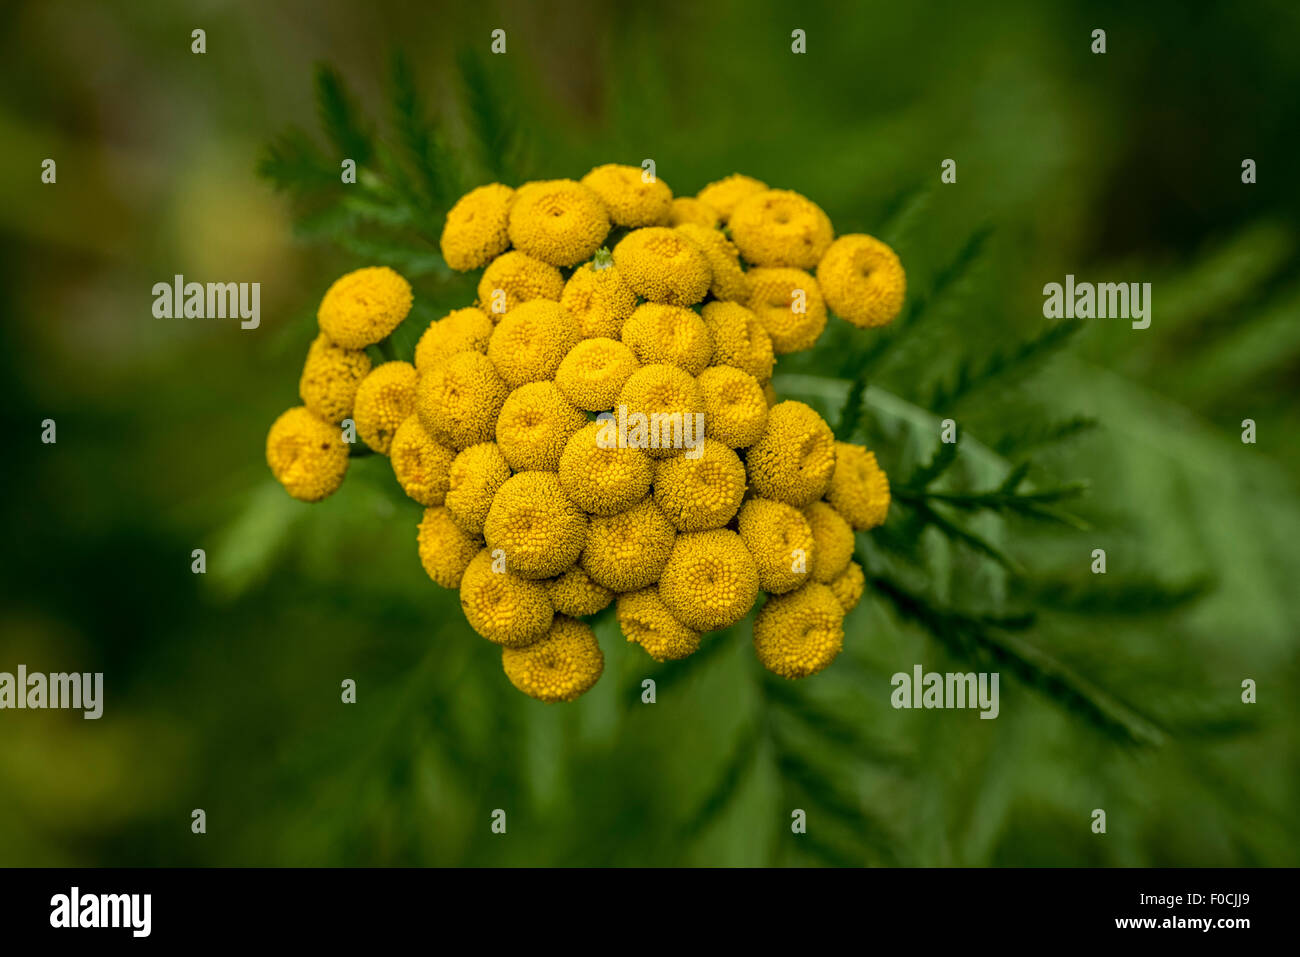 Tanaisie commune / boutons / amer amer vache / golden boutons (Tanacetum vulgare / Chrysanthemum vulgare) en fleurs Banque D'Images